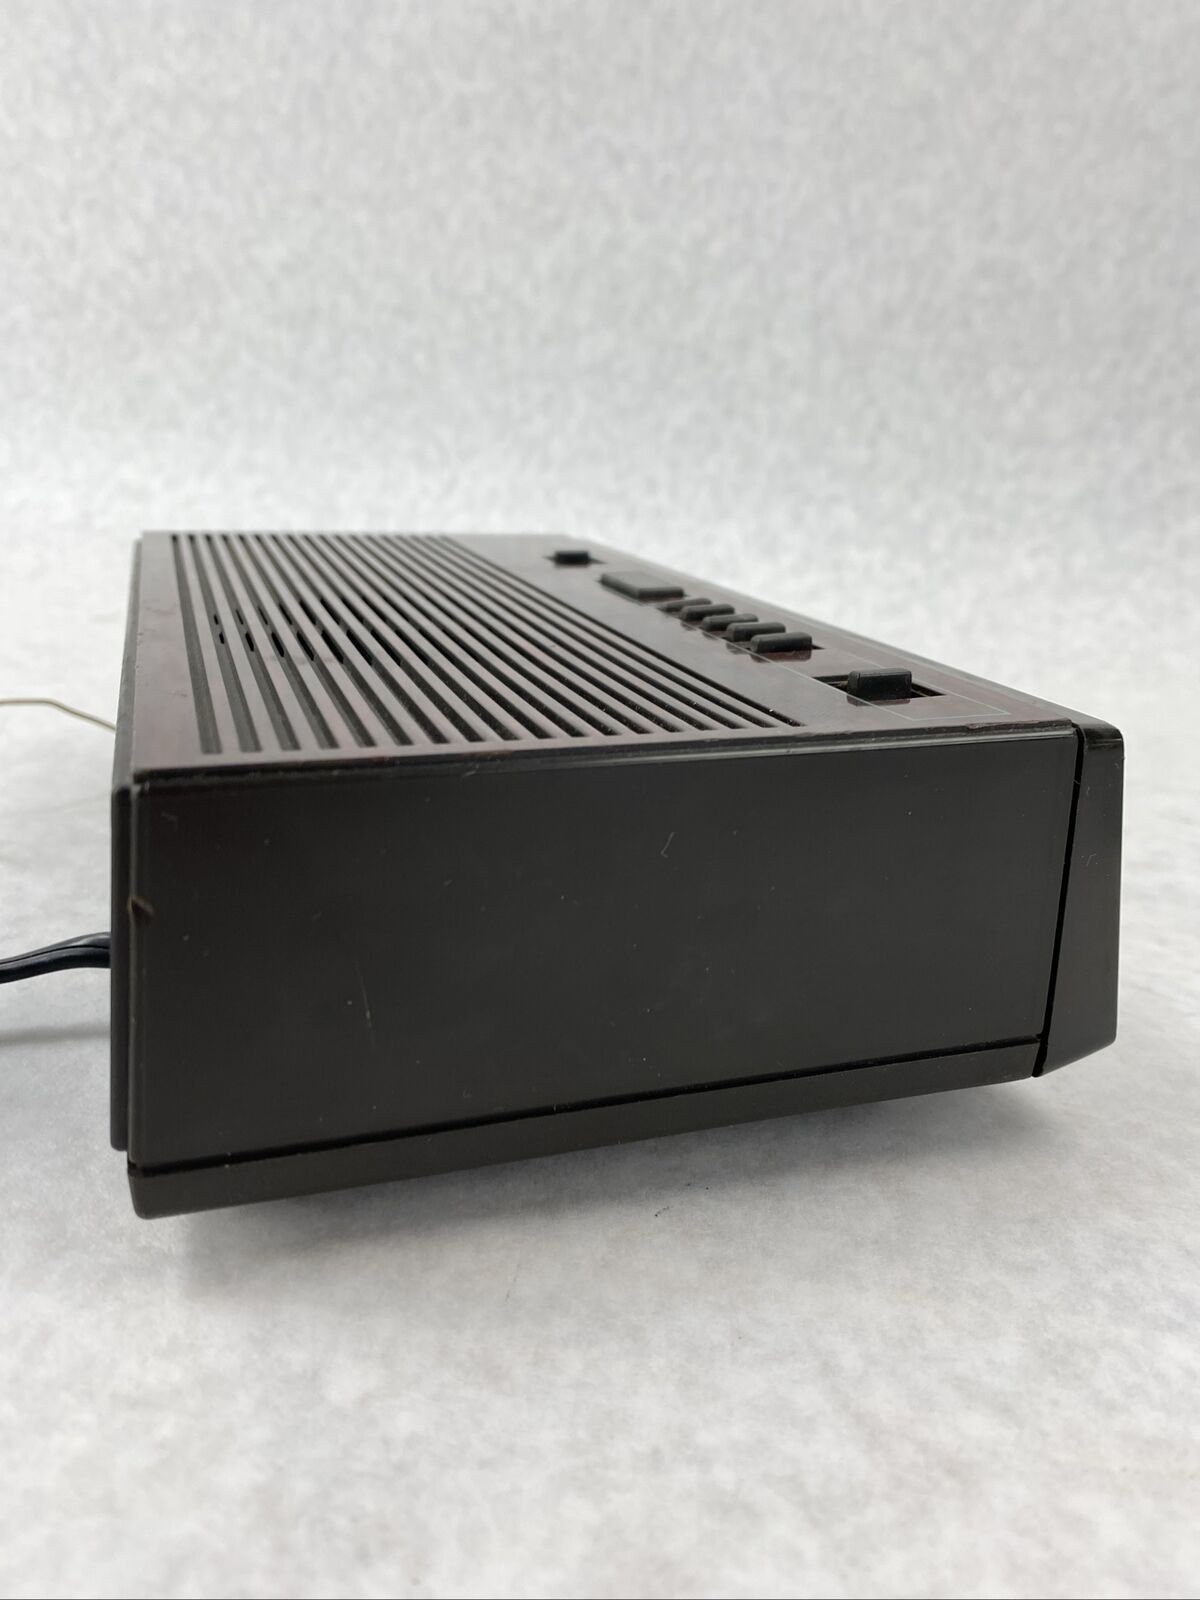 Soundesign 3620WAL Vintage Retro AM/FM Radio Alarm Clock Neon Red Display